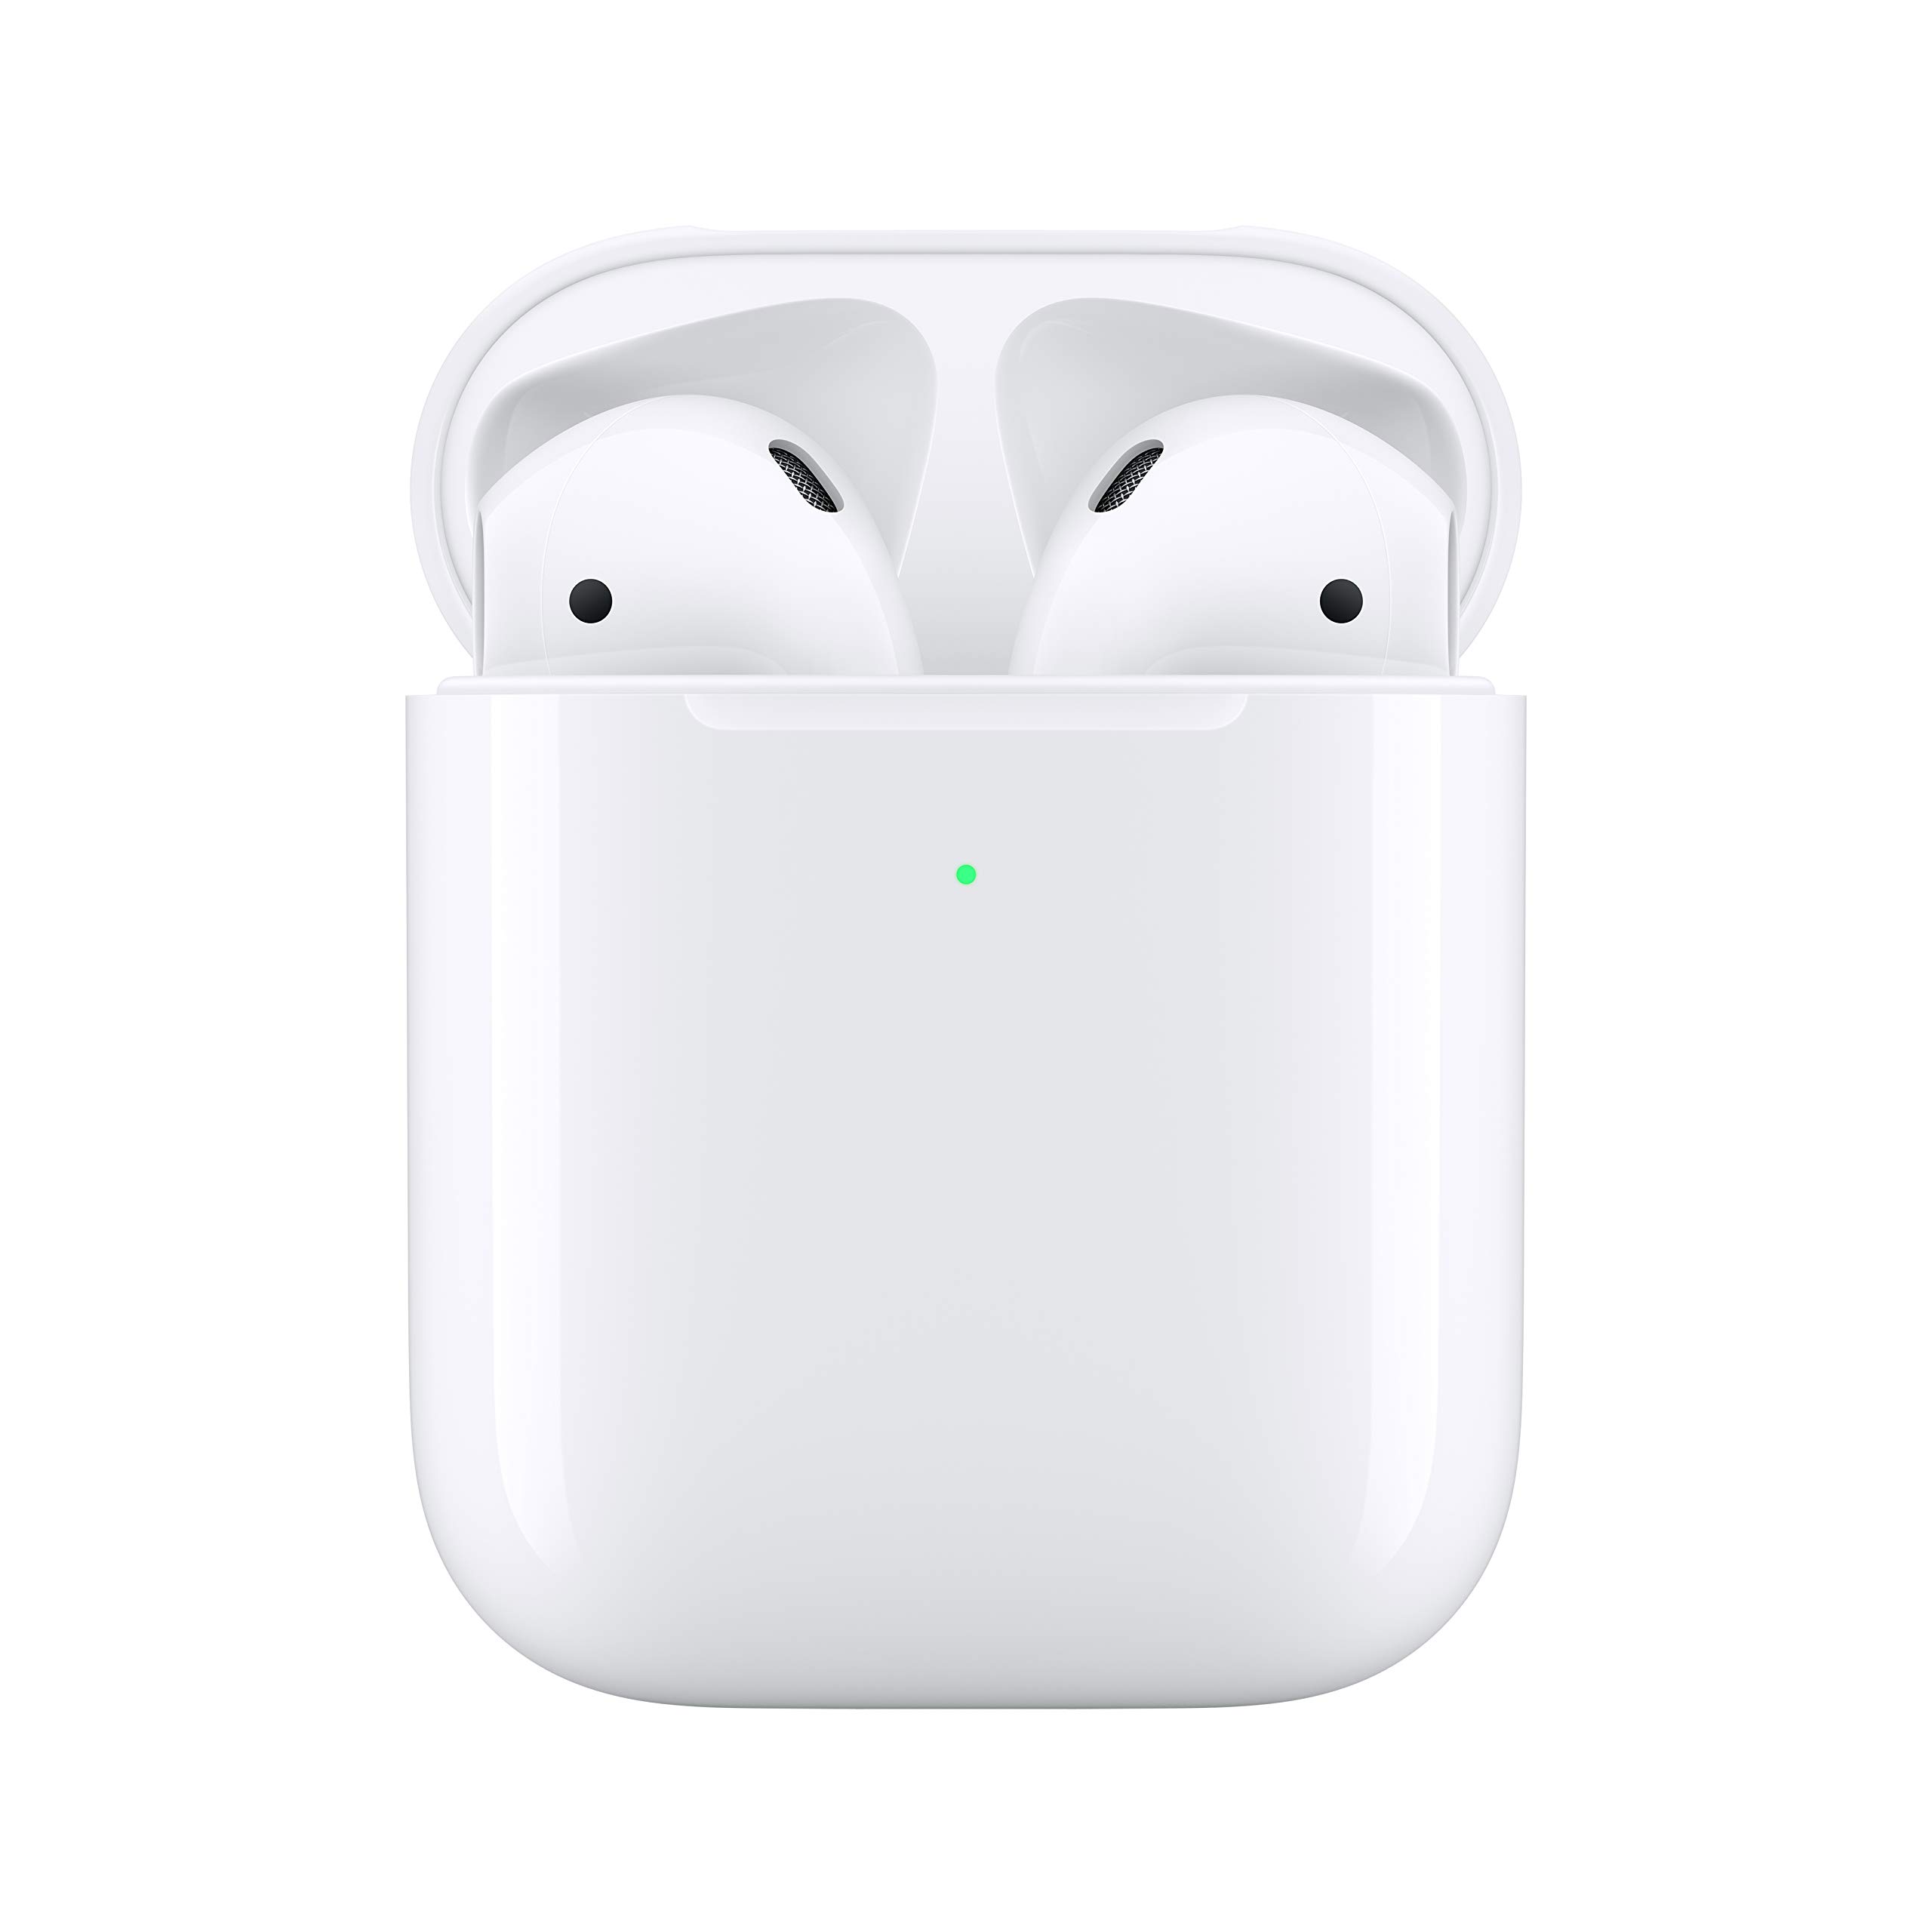 Apple वायरलेस चार्जिंग केस के साथ एयरपॉड्स